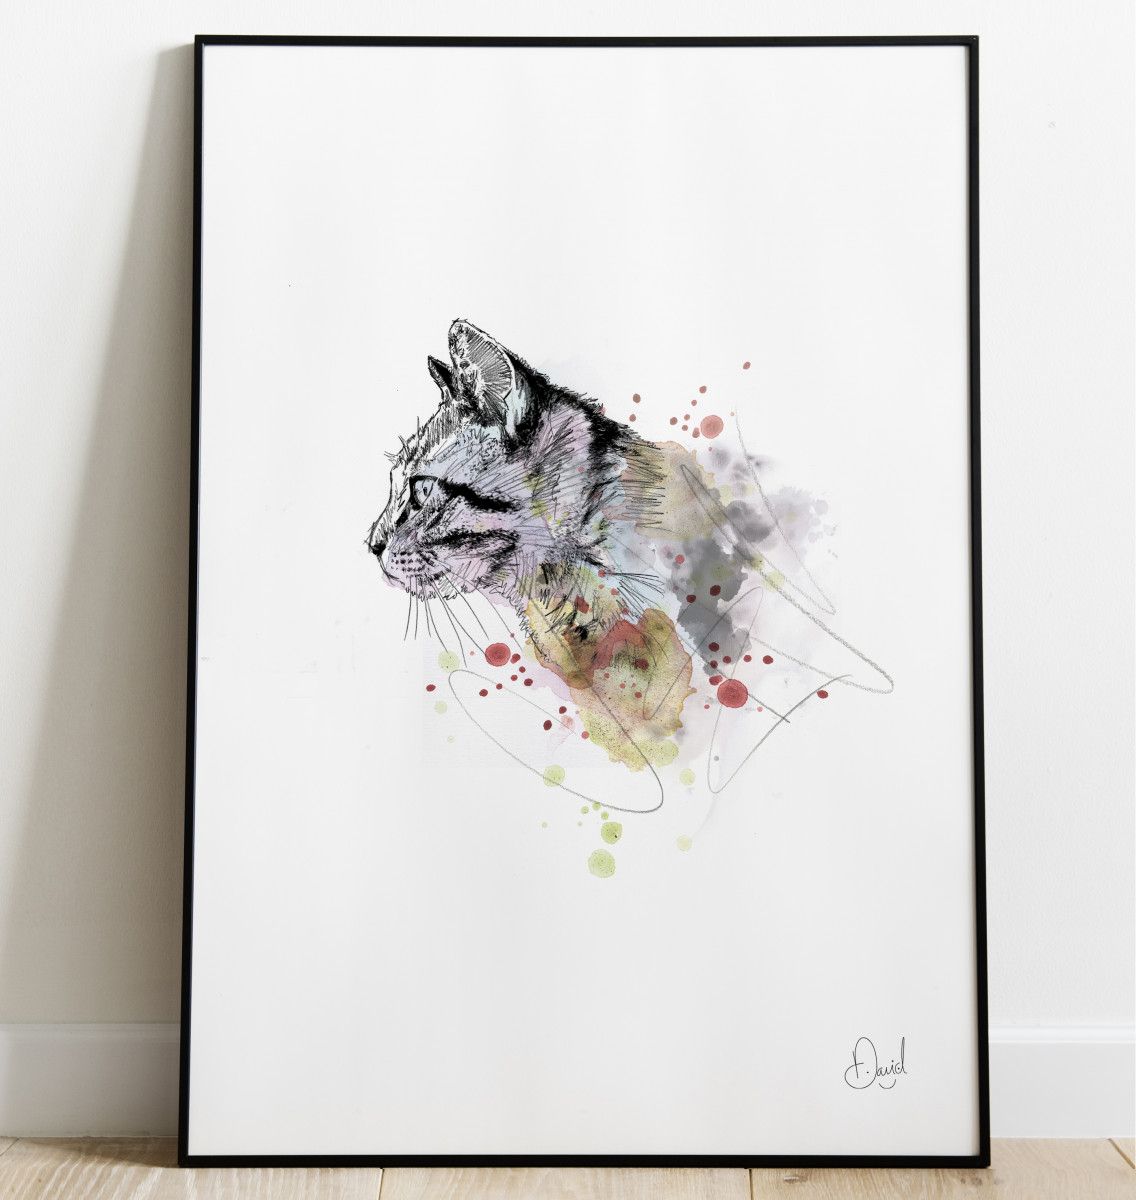 David Marston Art - Cats - Curiosity The Cat